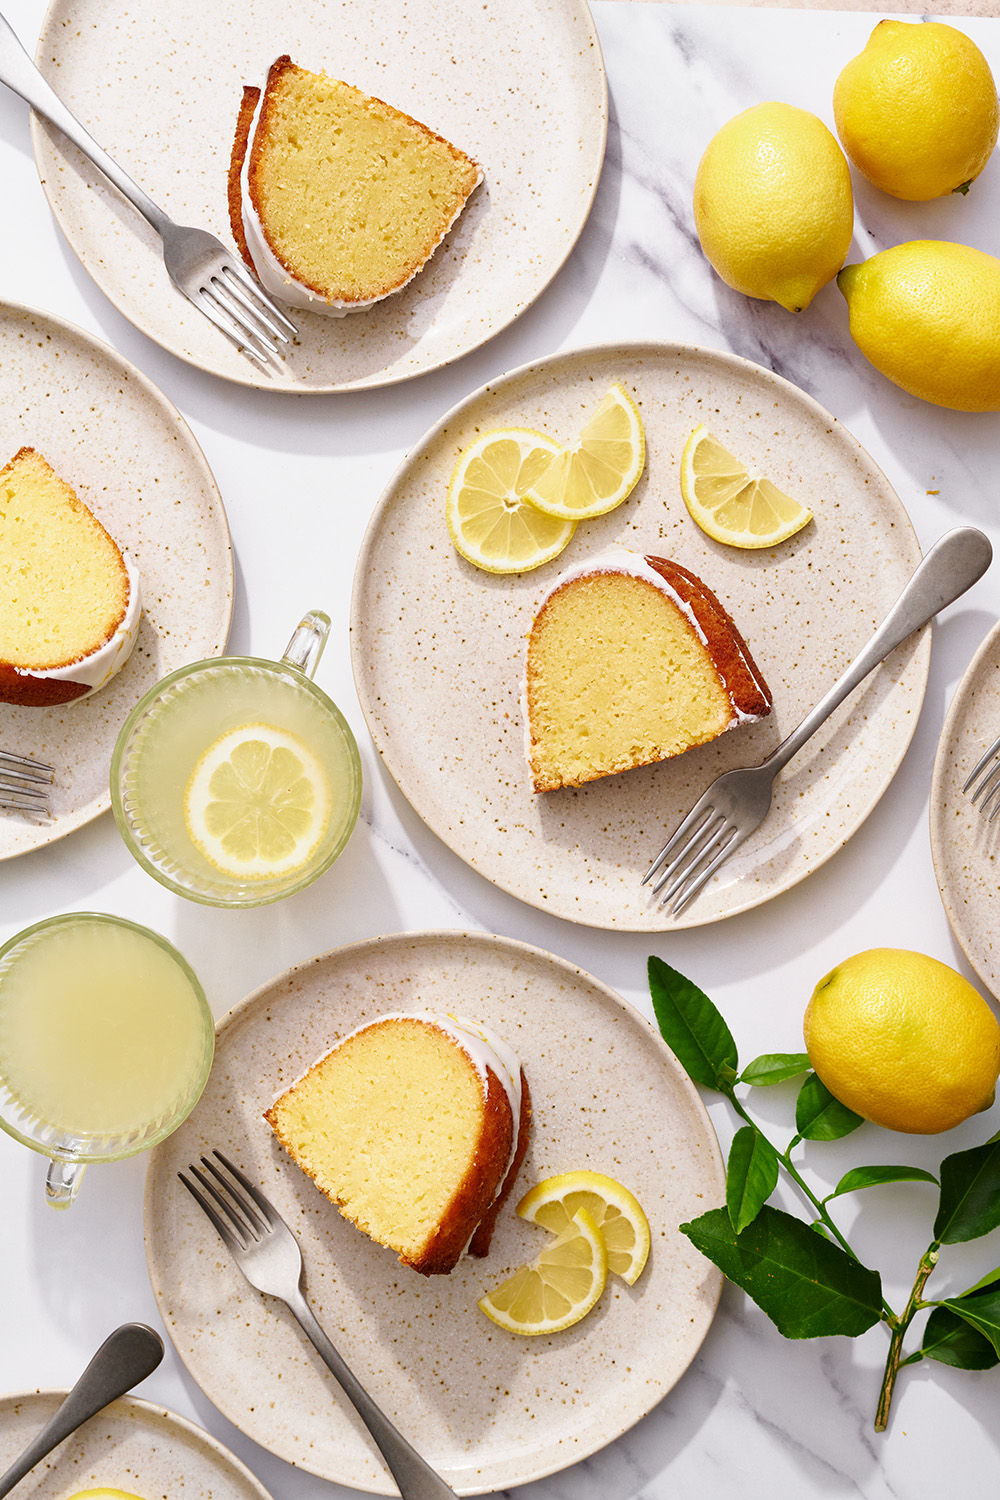 Slices of lemon bundt cake on plates with forks and slices of fresh lemons